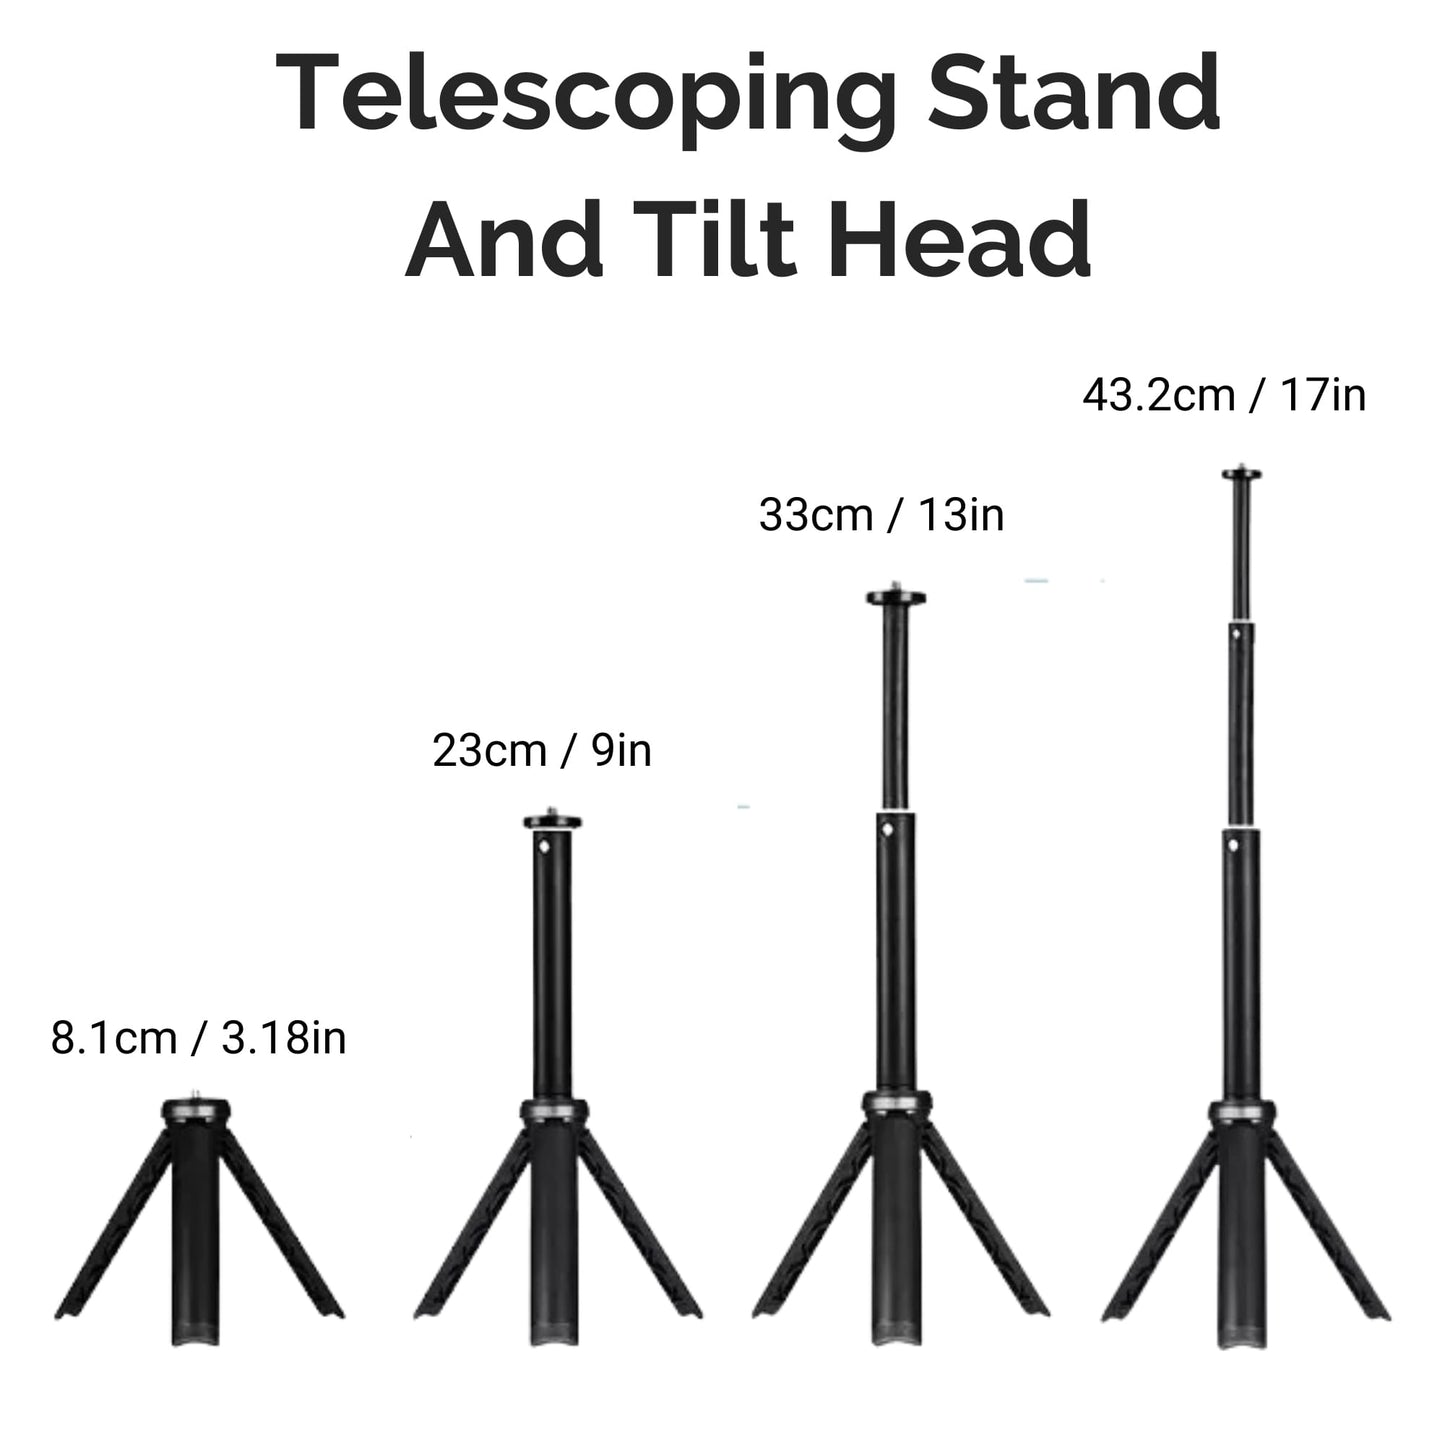 Telescopic Desk Tripod heights